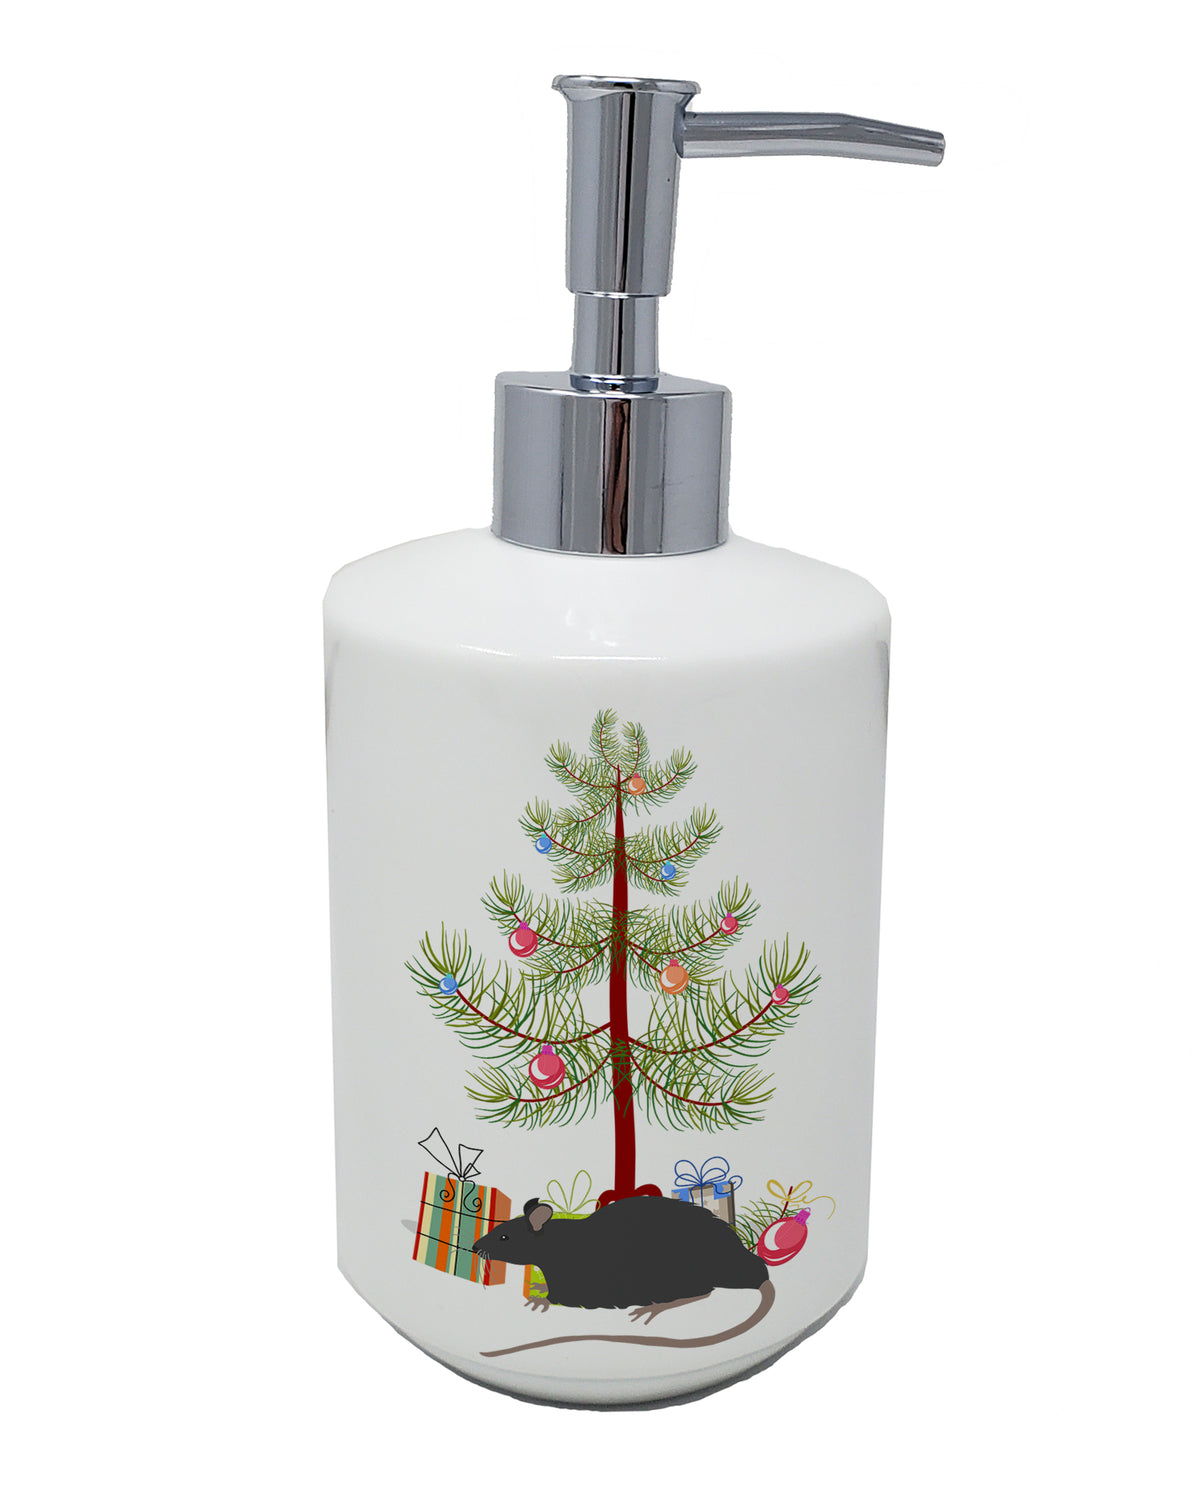 Buy this Black Rat Merry Christmas Ceramic Soap Dispenser